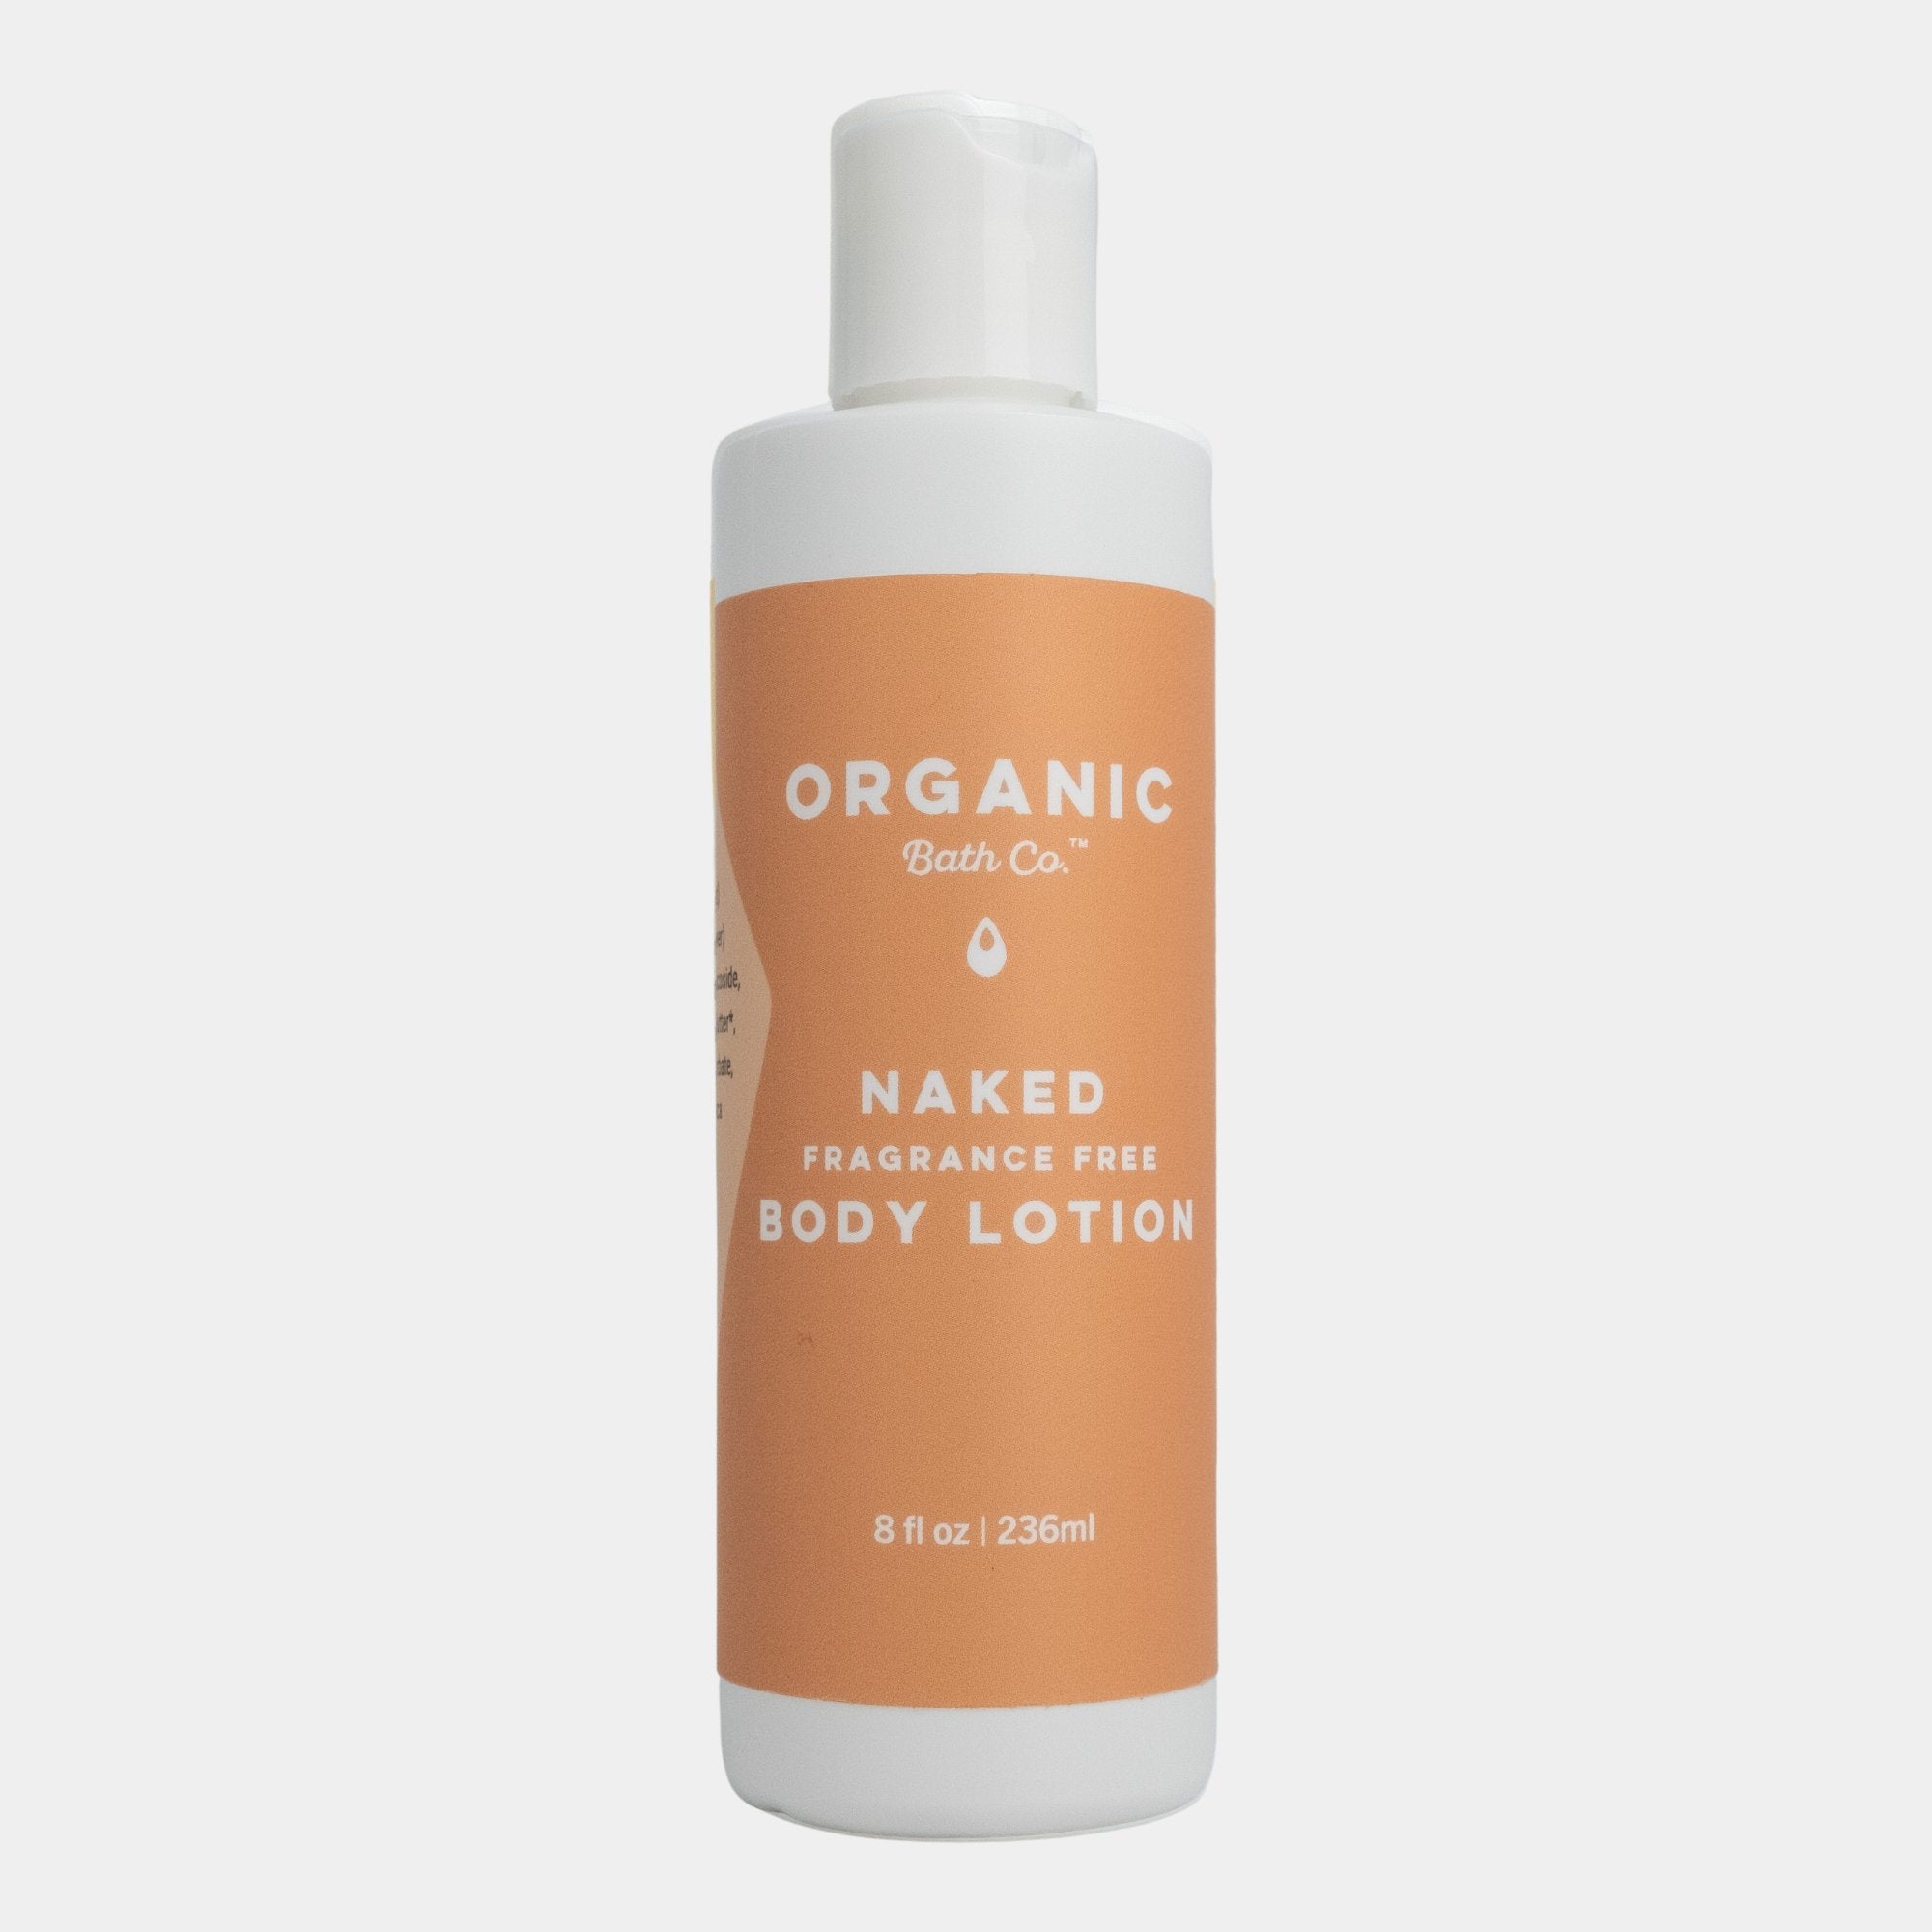 Naked Body Lotion - Organic Bath Co.